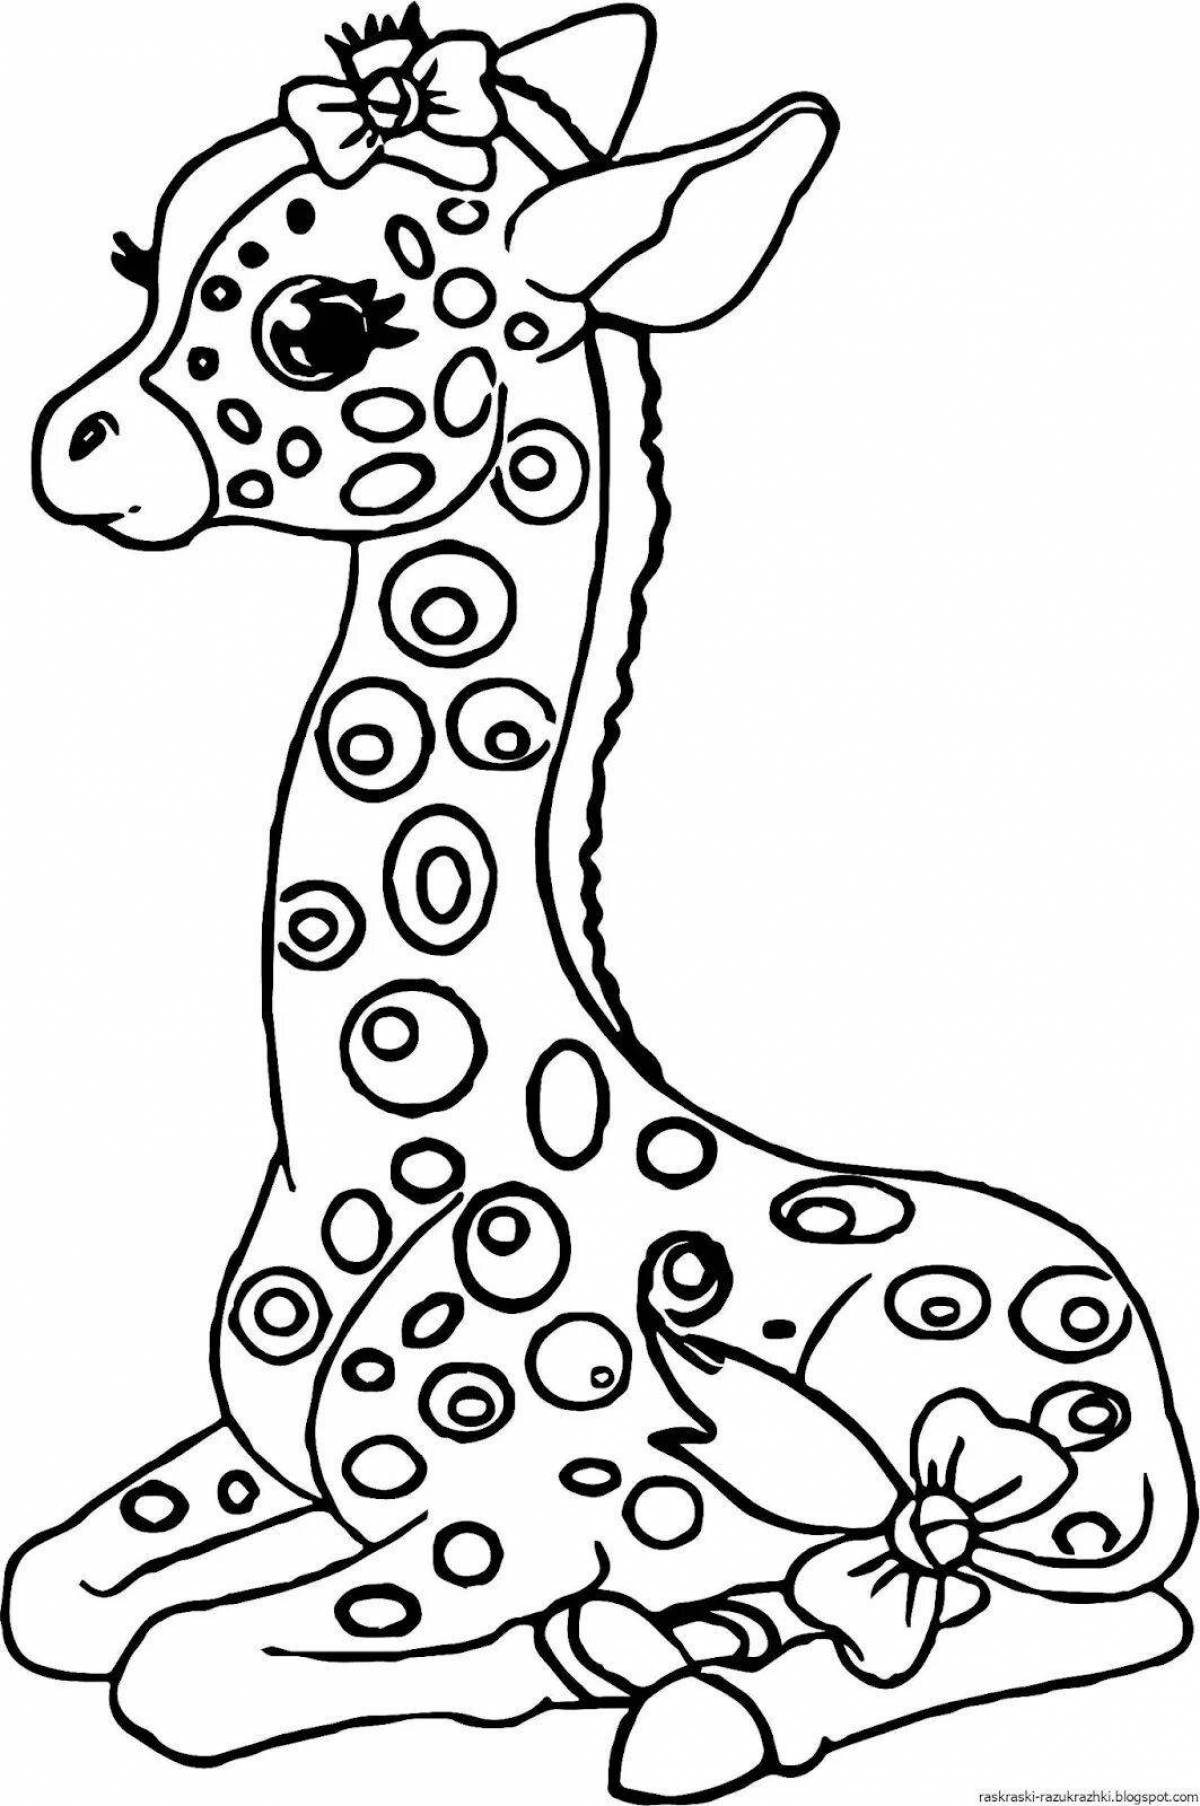 Giraffe Live Coloring